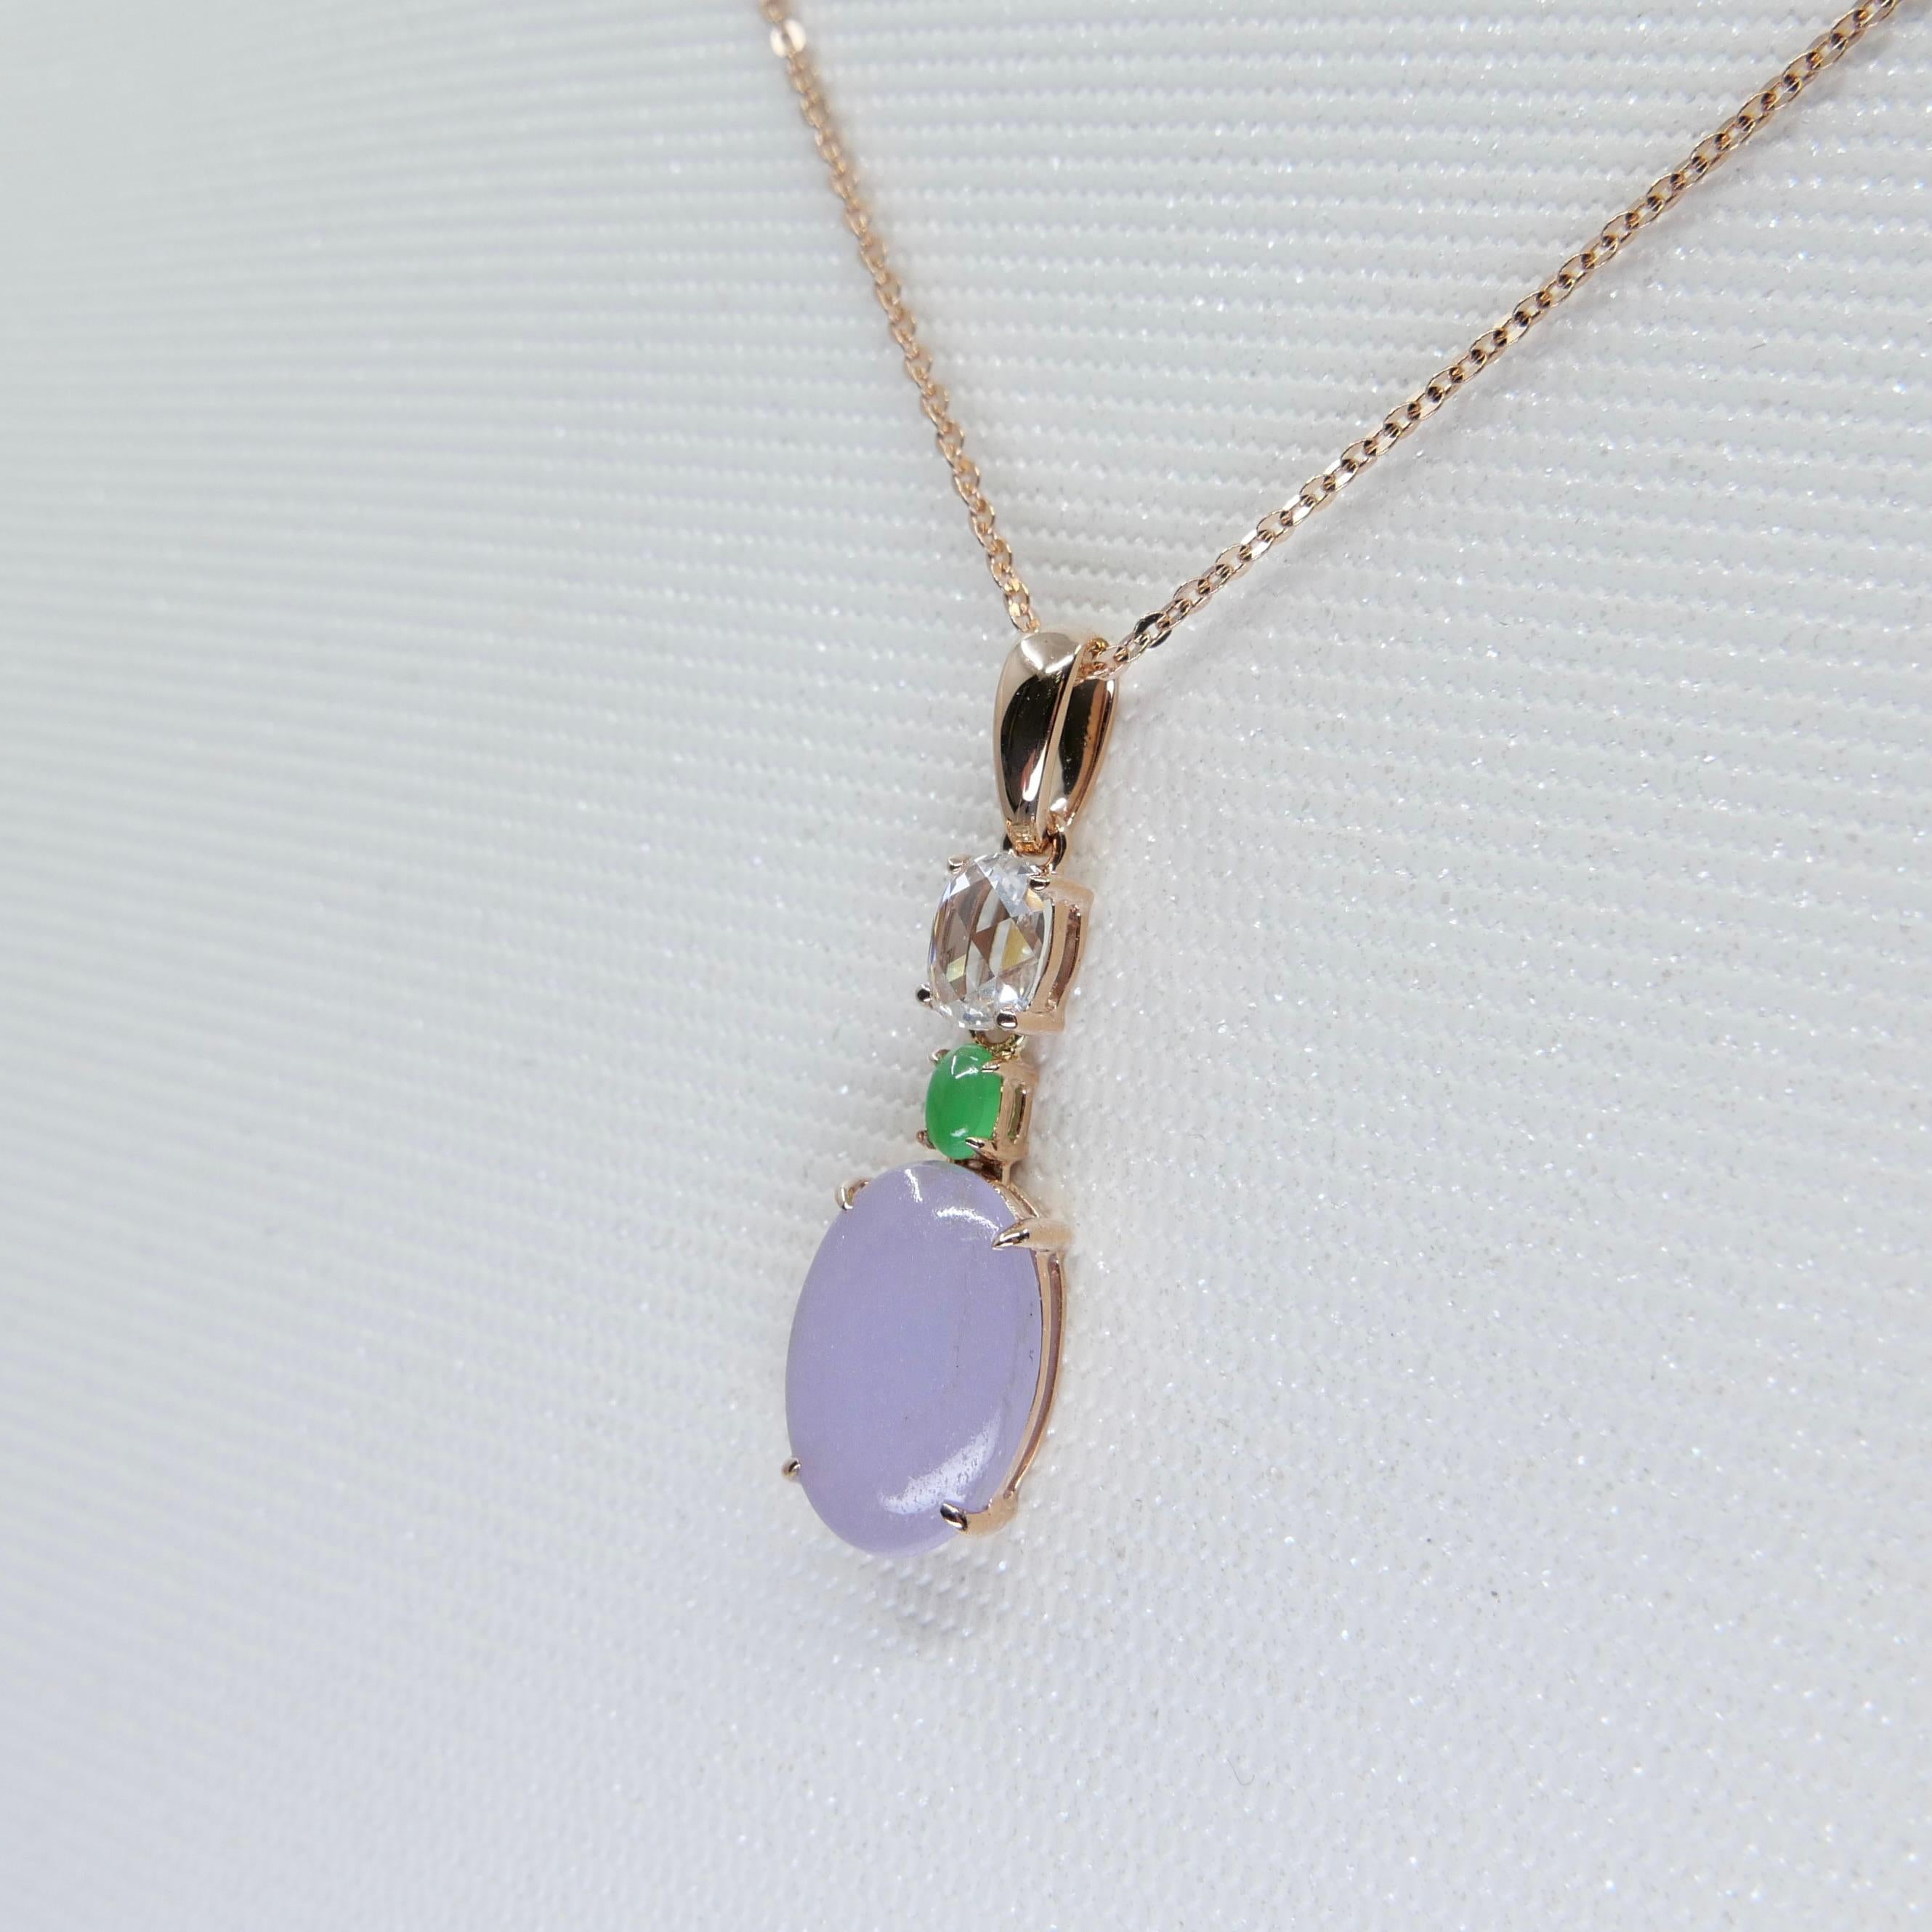 Certified 1.97Cts Lavender Jade & Rose Cut Diamond Drop Pendant Necklace For Sale 1